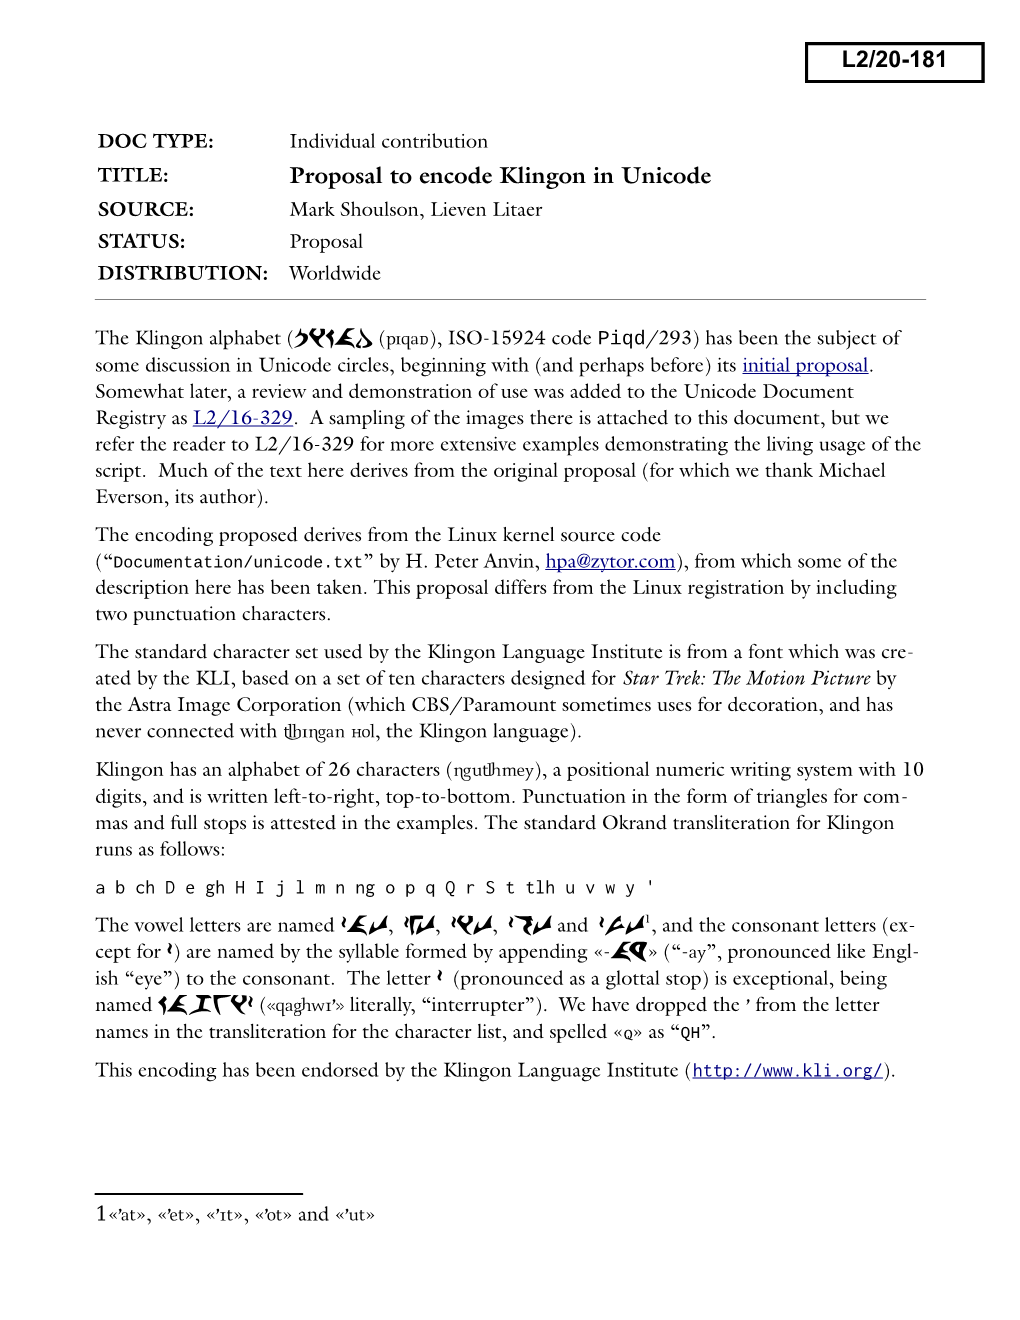 Proposal to Encode Klingon in Unicode L2/20-181